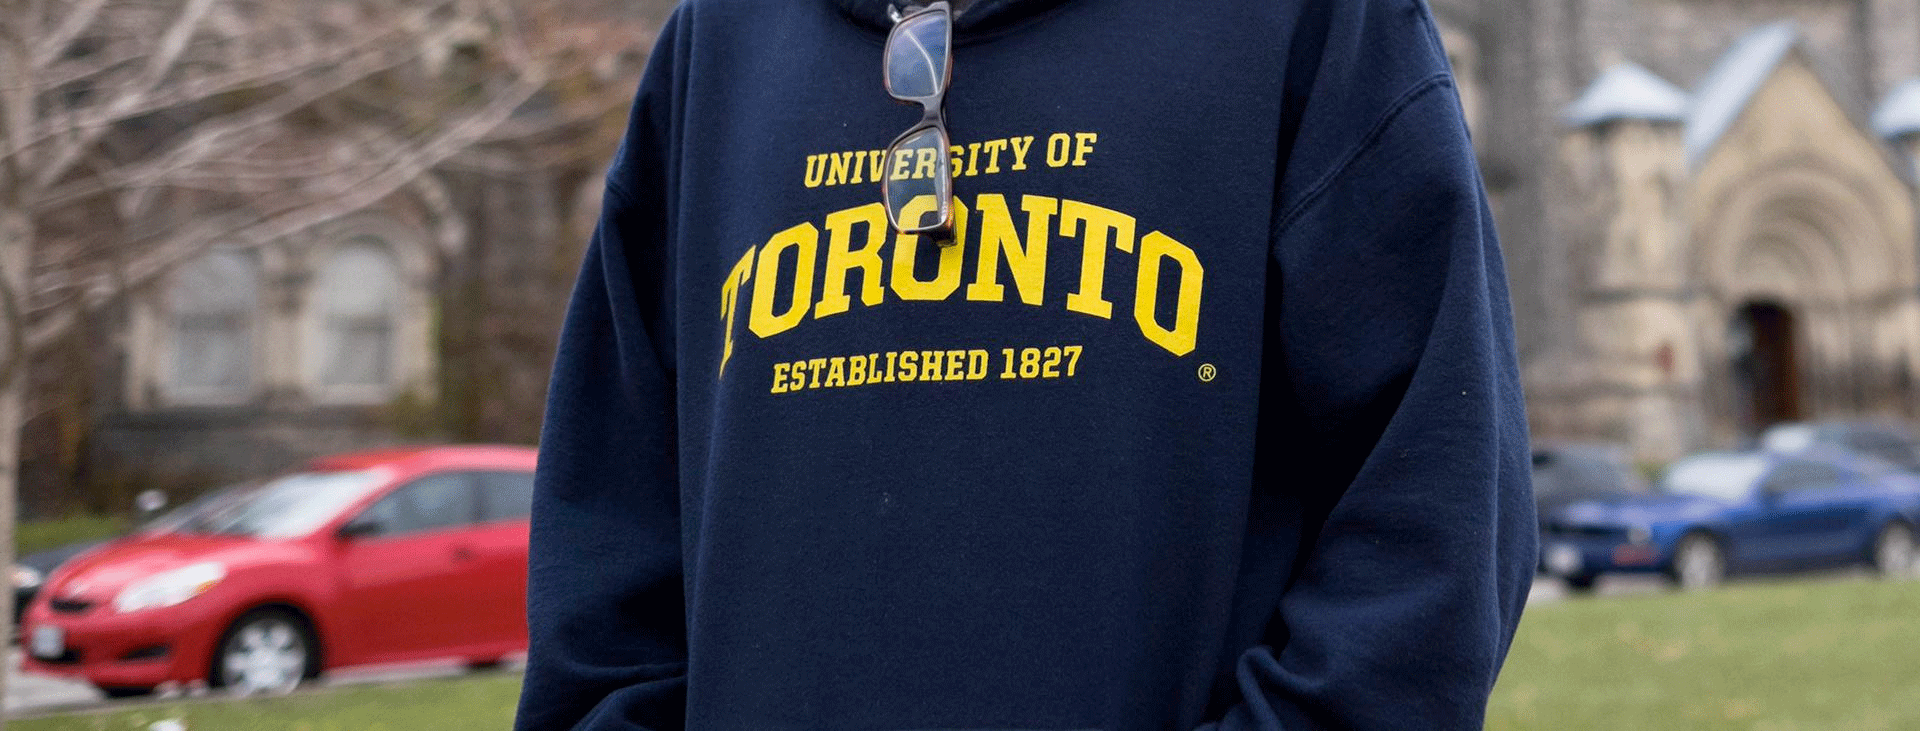 University of Toronto dark navy sweatshirt with yellow lettering